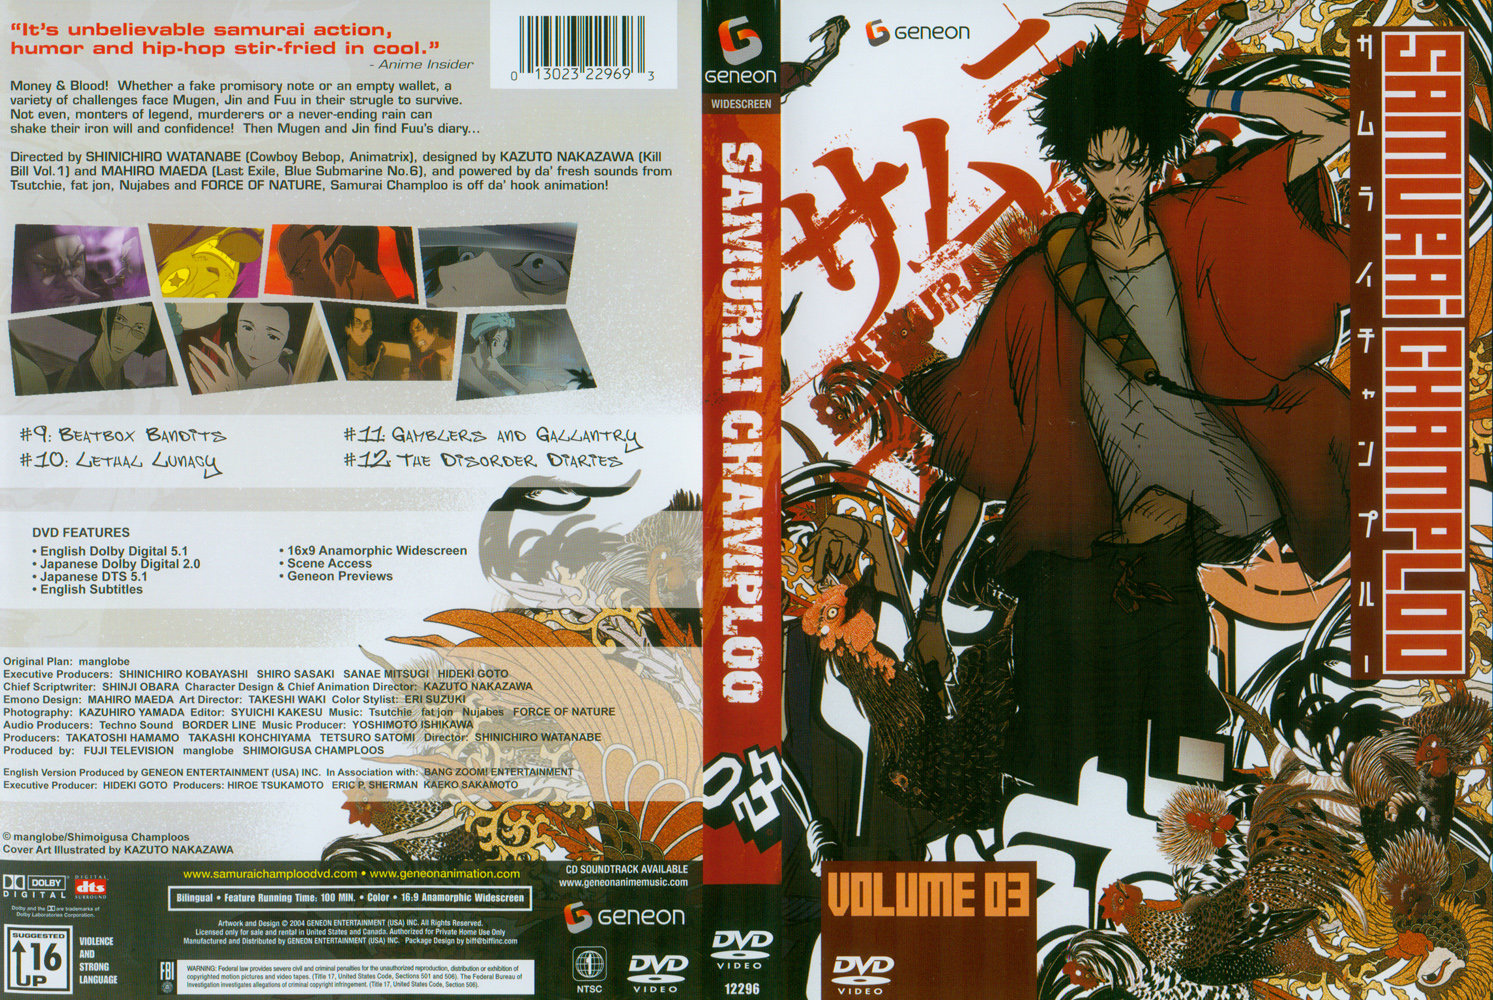 Jaquette DVD Samurai champloo vol 03 Zone 1